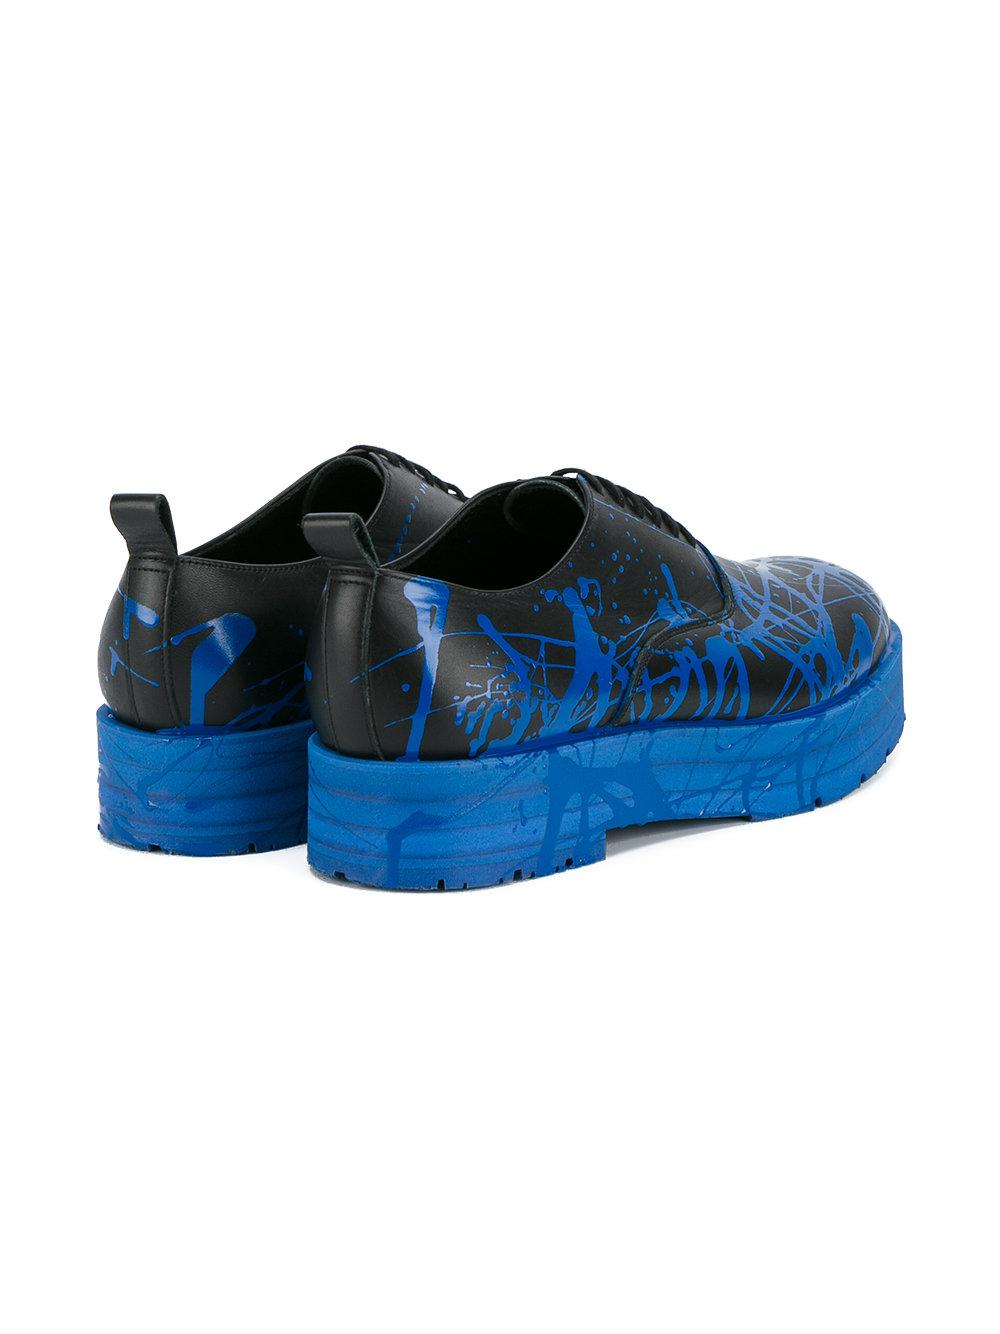 Lyst - Comme des Garçons Paint Splatter Oxford Shoes in Black for Men